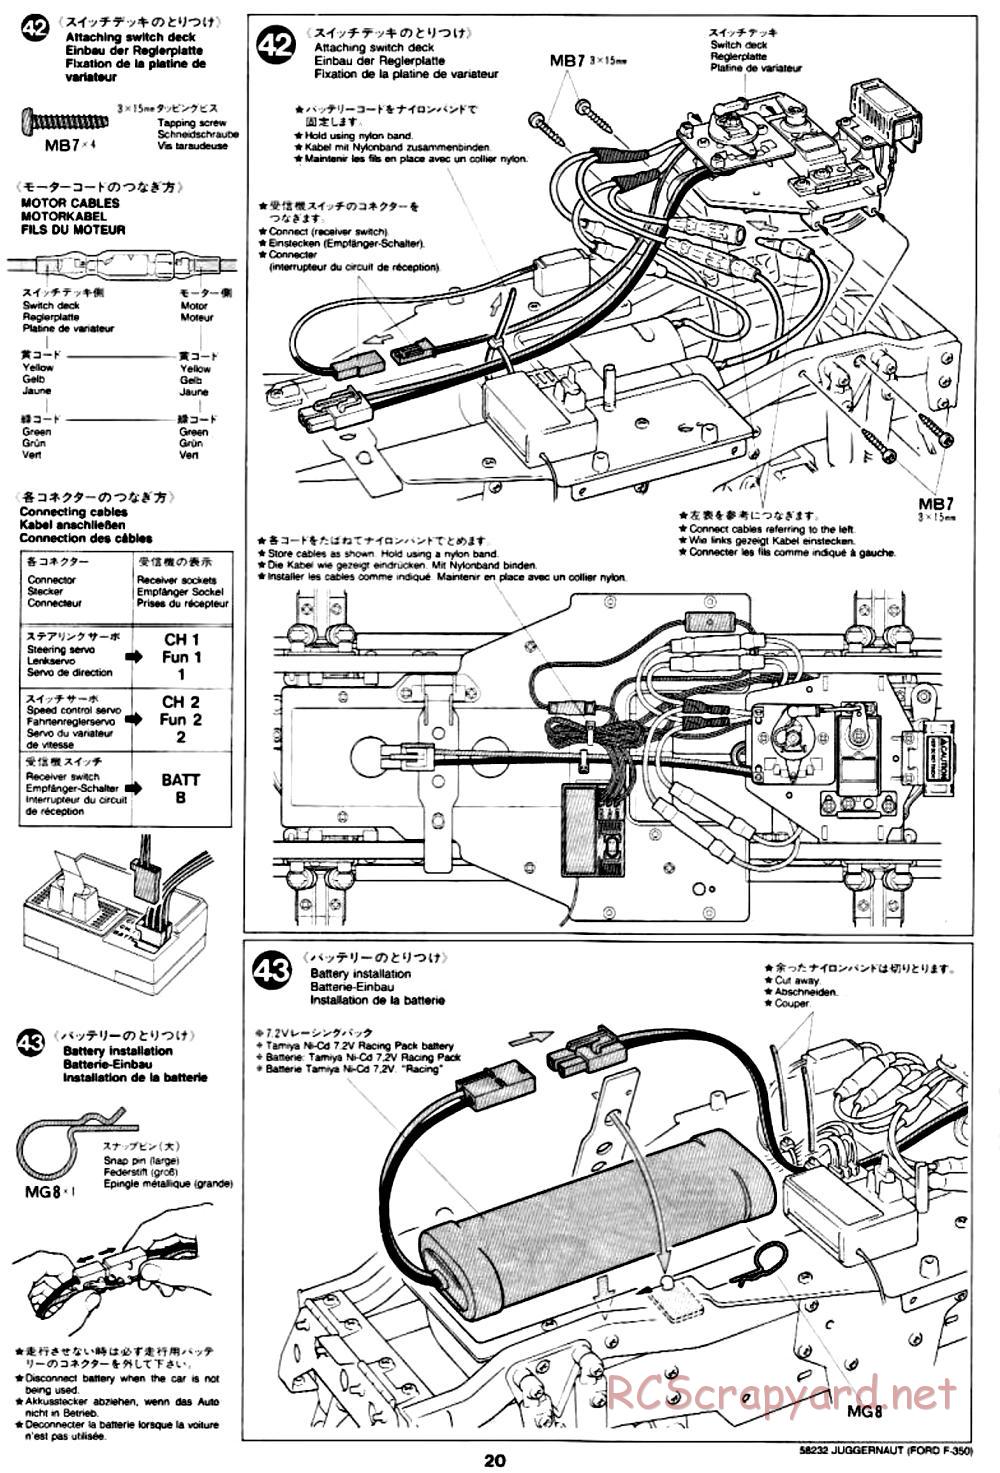 Tamiya - Juggernaut Chassis - Manual - Page 20